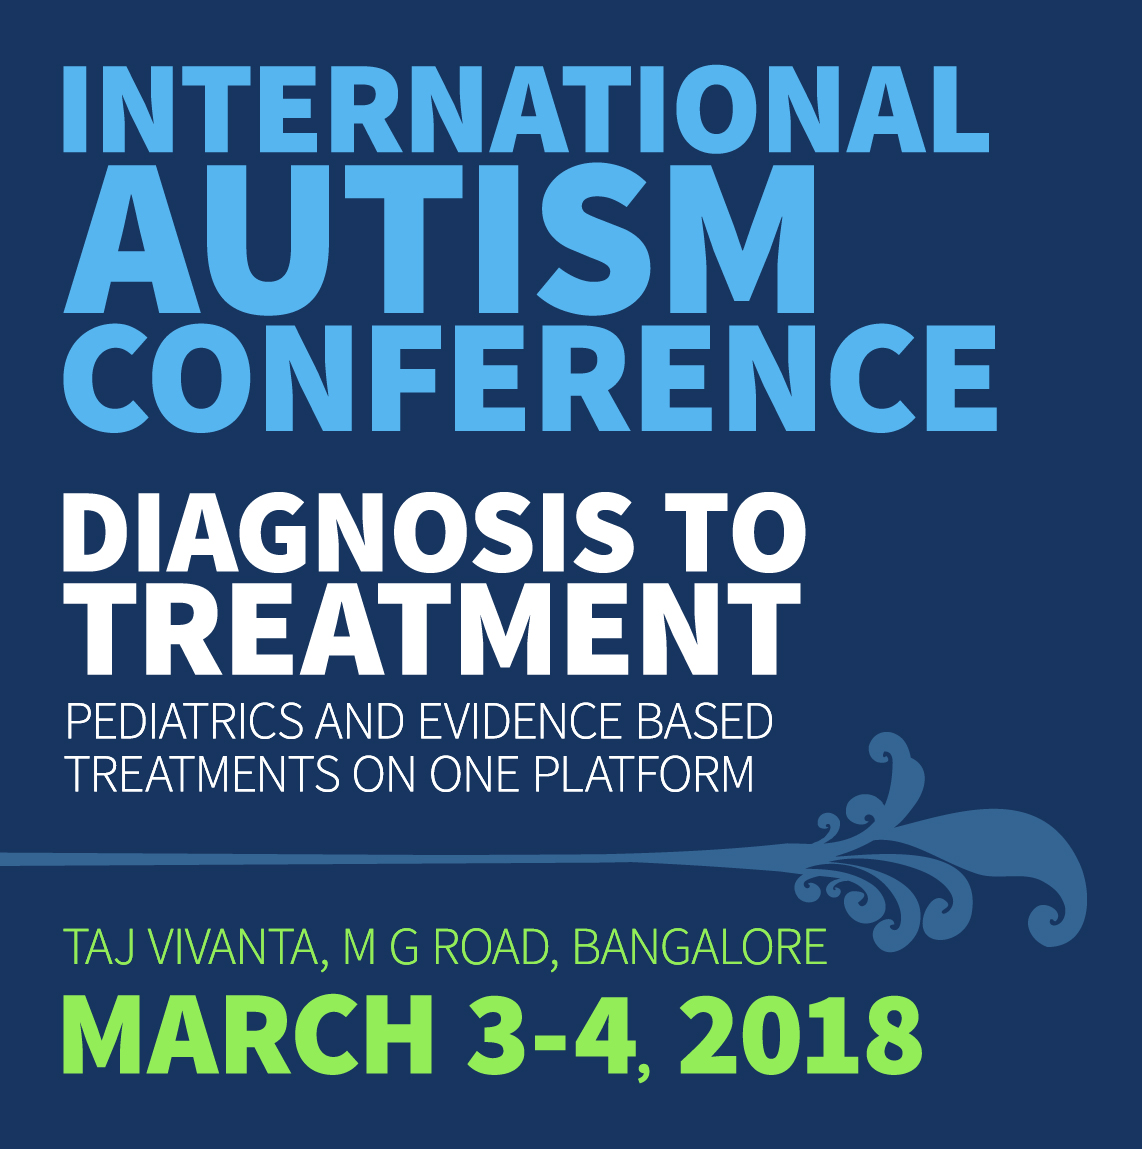 International Autism Conference - Diagnosis to Treatment. Pediatrics and evidence based treatments on one platform. March 03-04, 2018. Taj Vivanta, MG Road, Bangalore, India